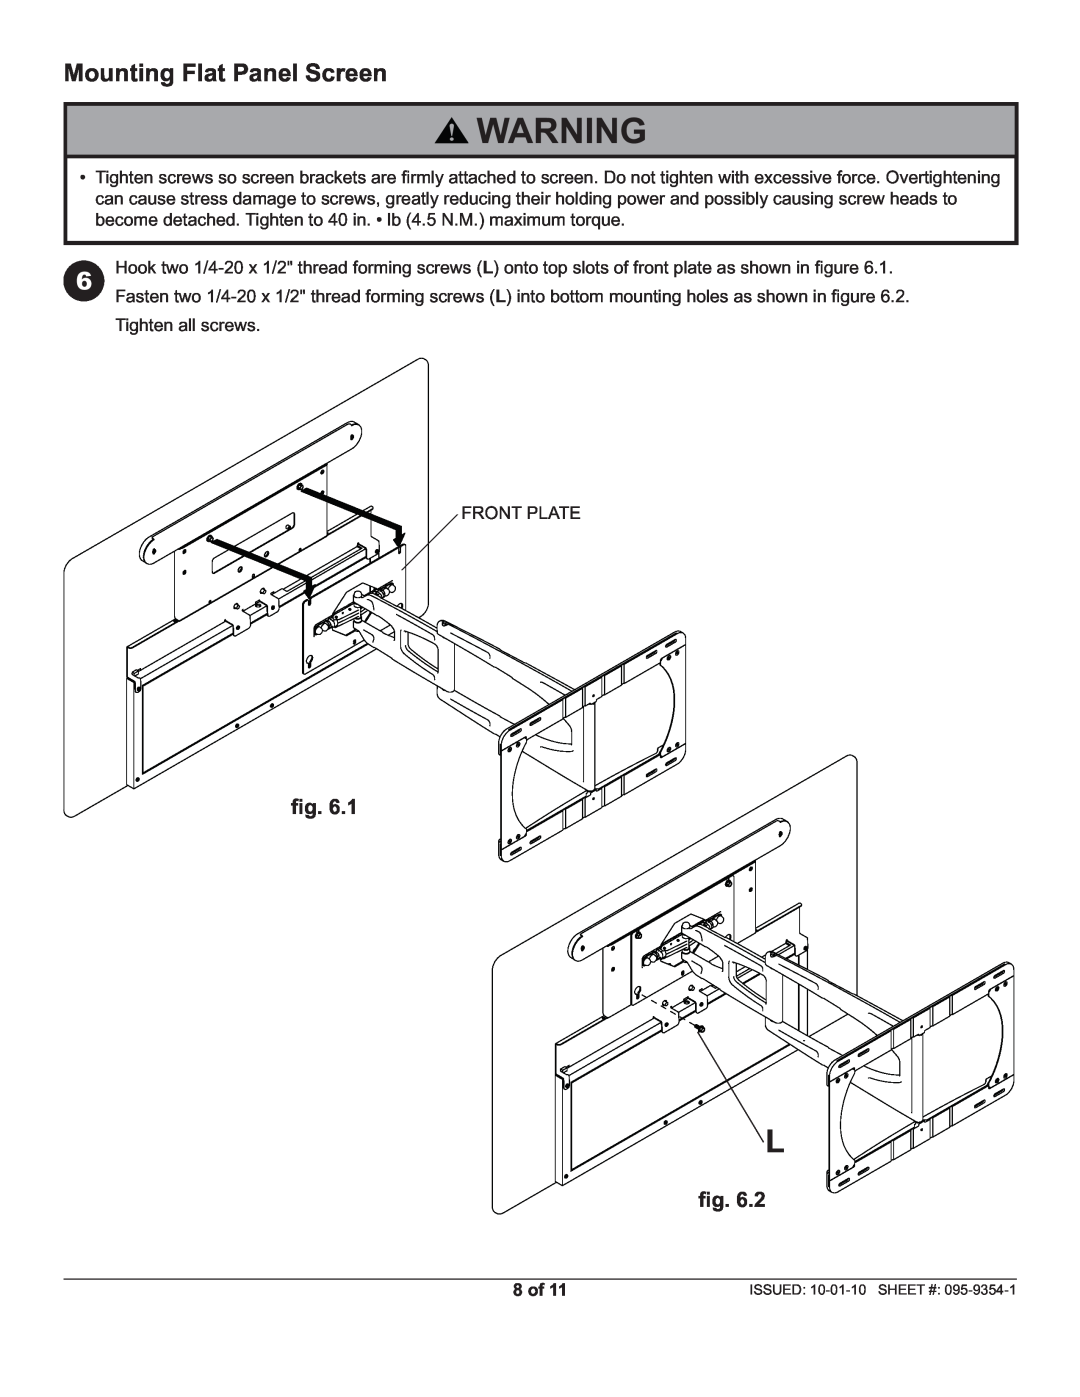 Peerless Industries SUAC9000 manual Mounting Flat Panel Screen, 8 of 